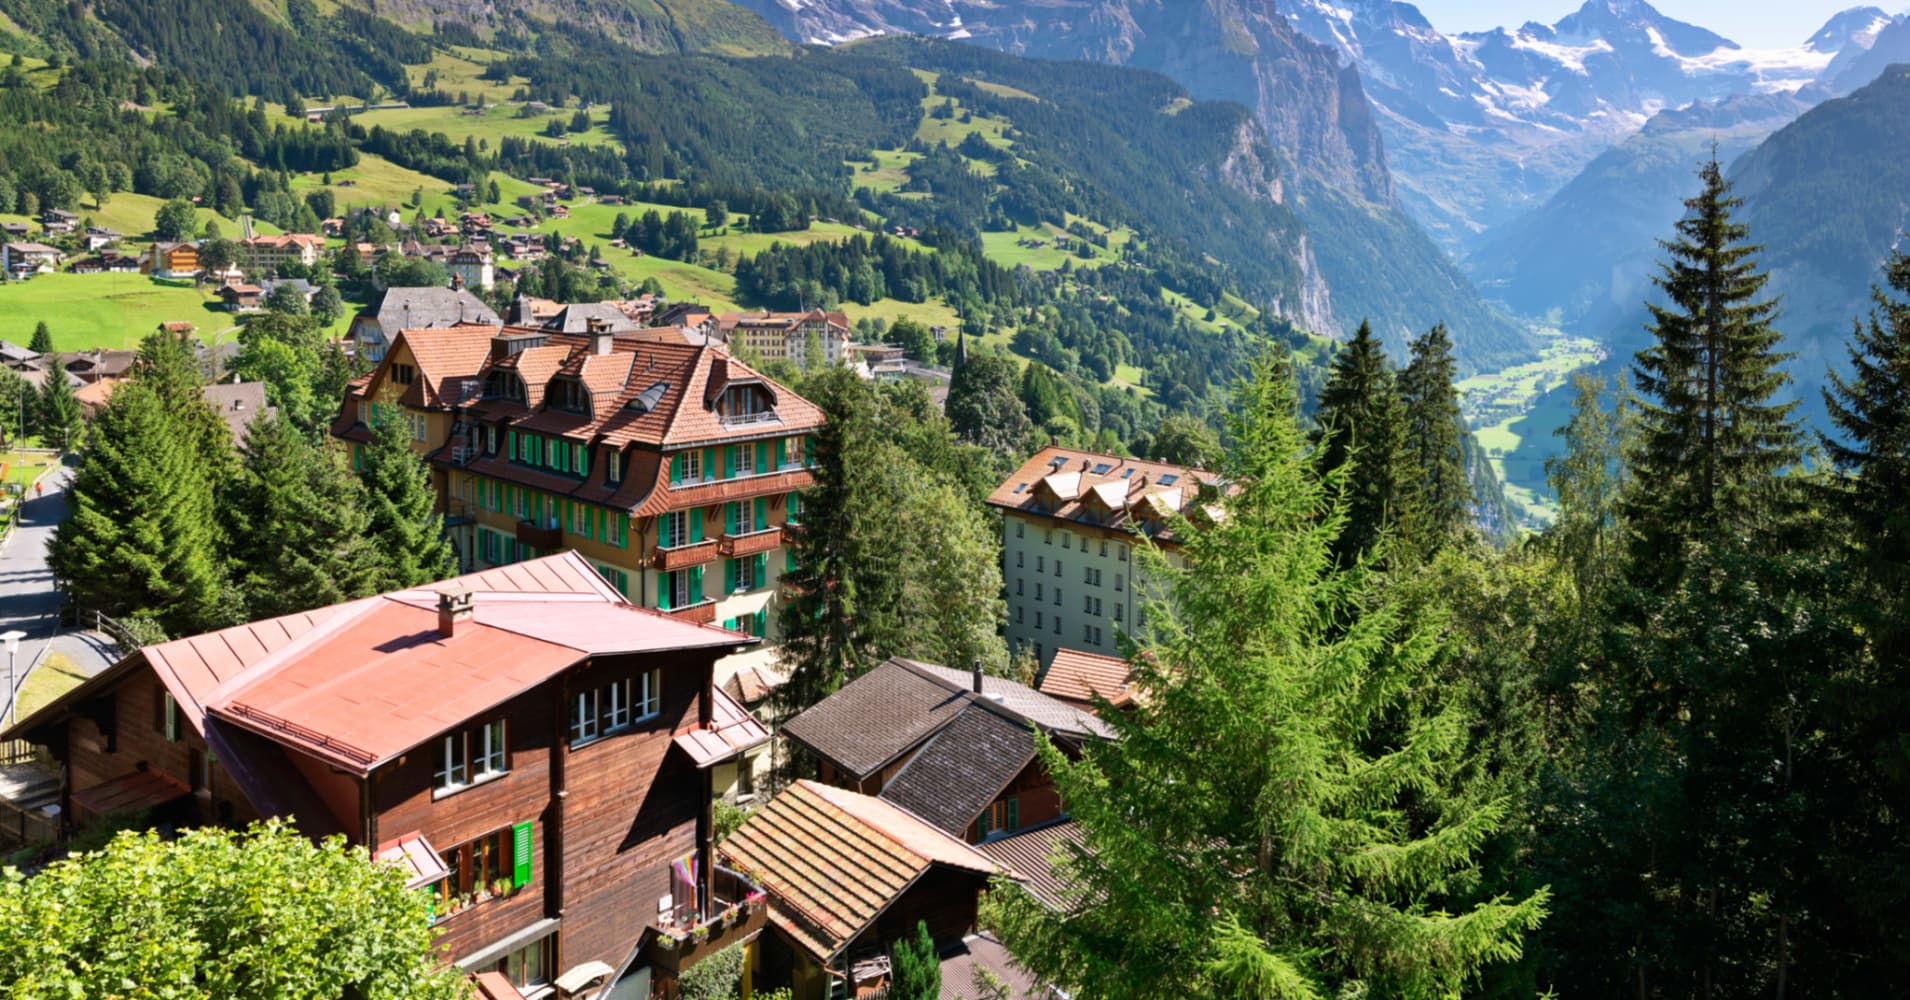 Cuckoo? Switzerland offers Europe's best living standards